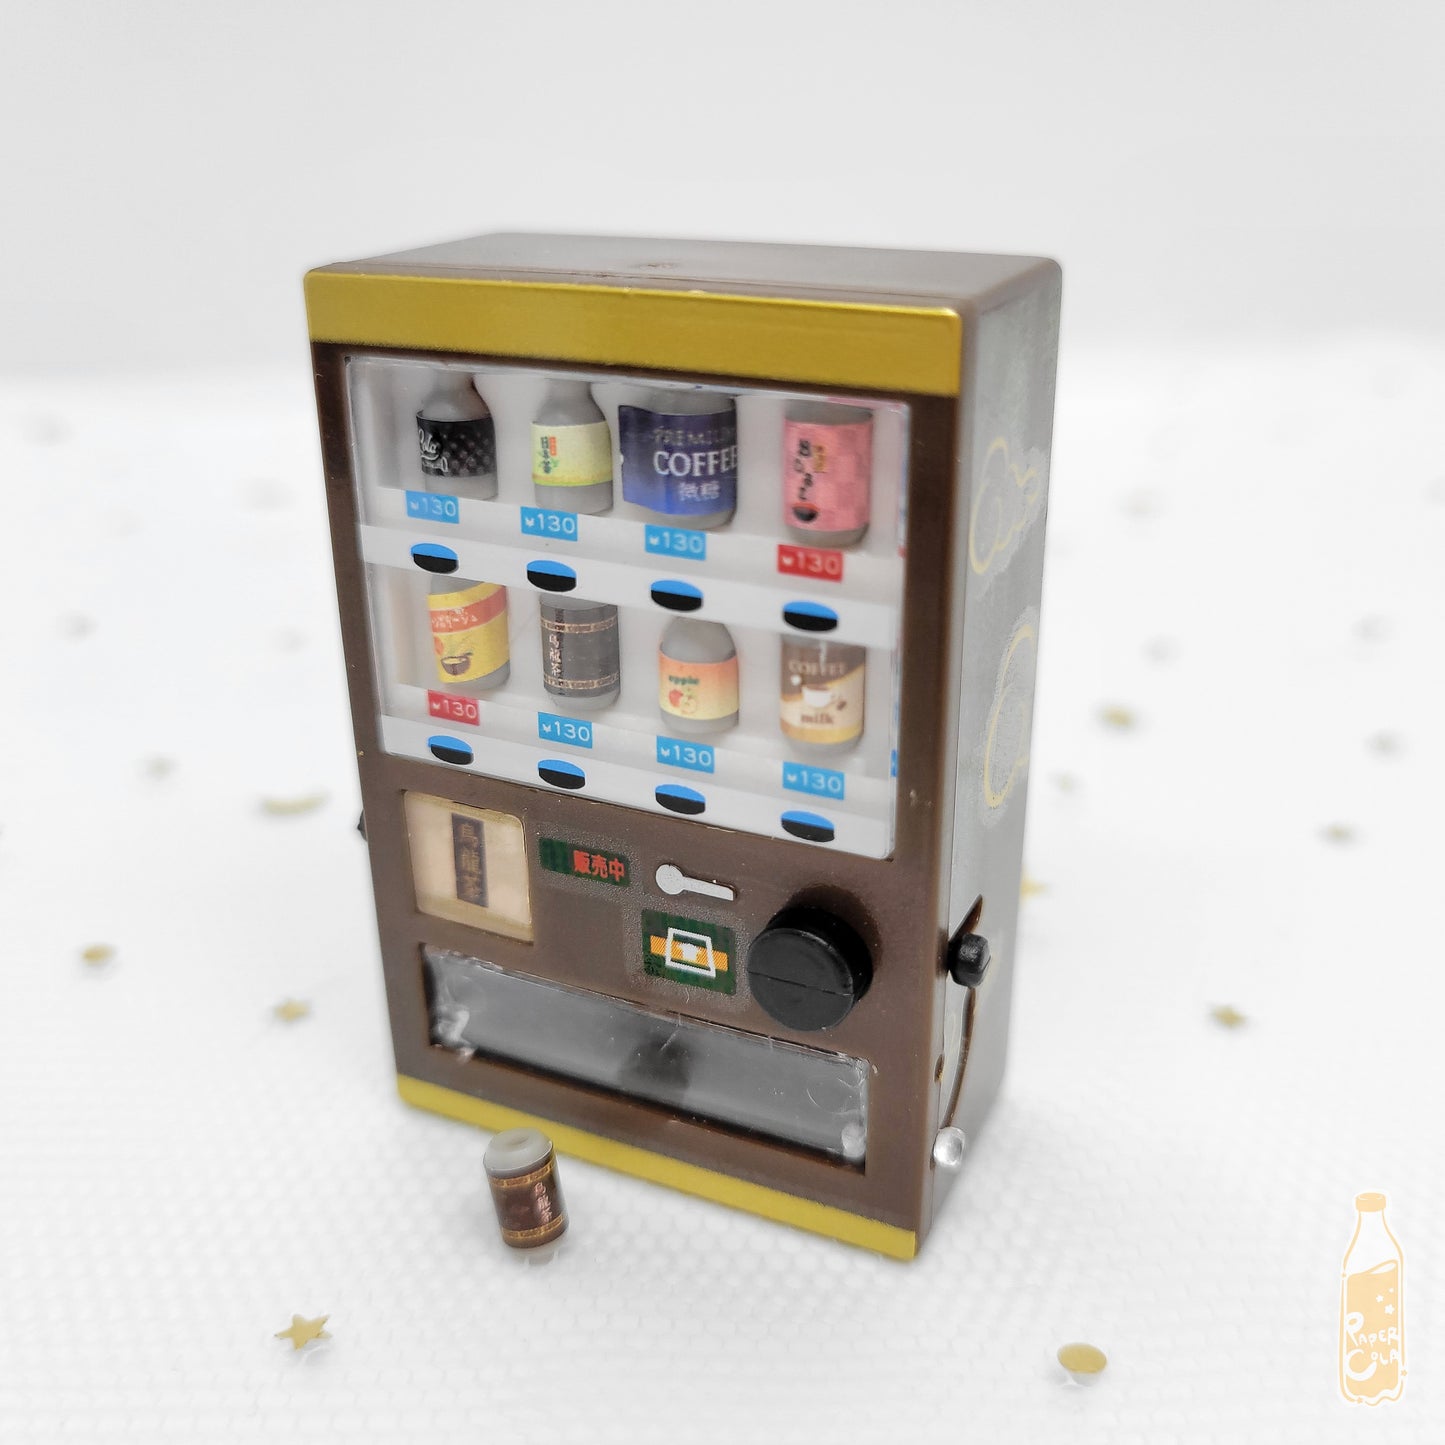 J-Dream Vending Machine Mascot Series 2